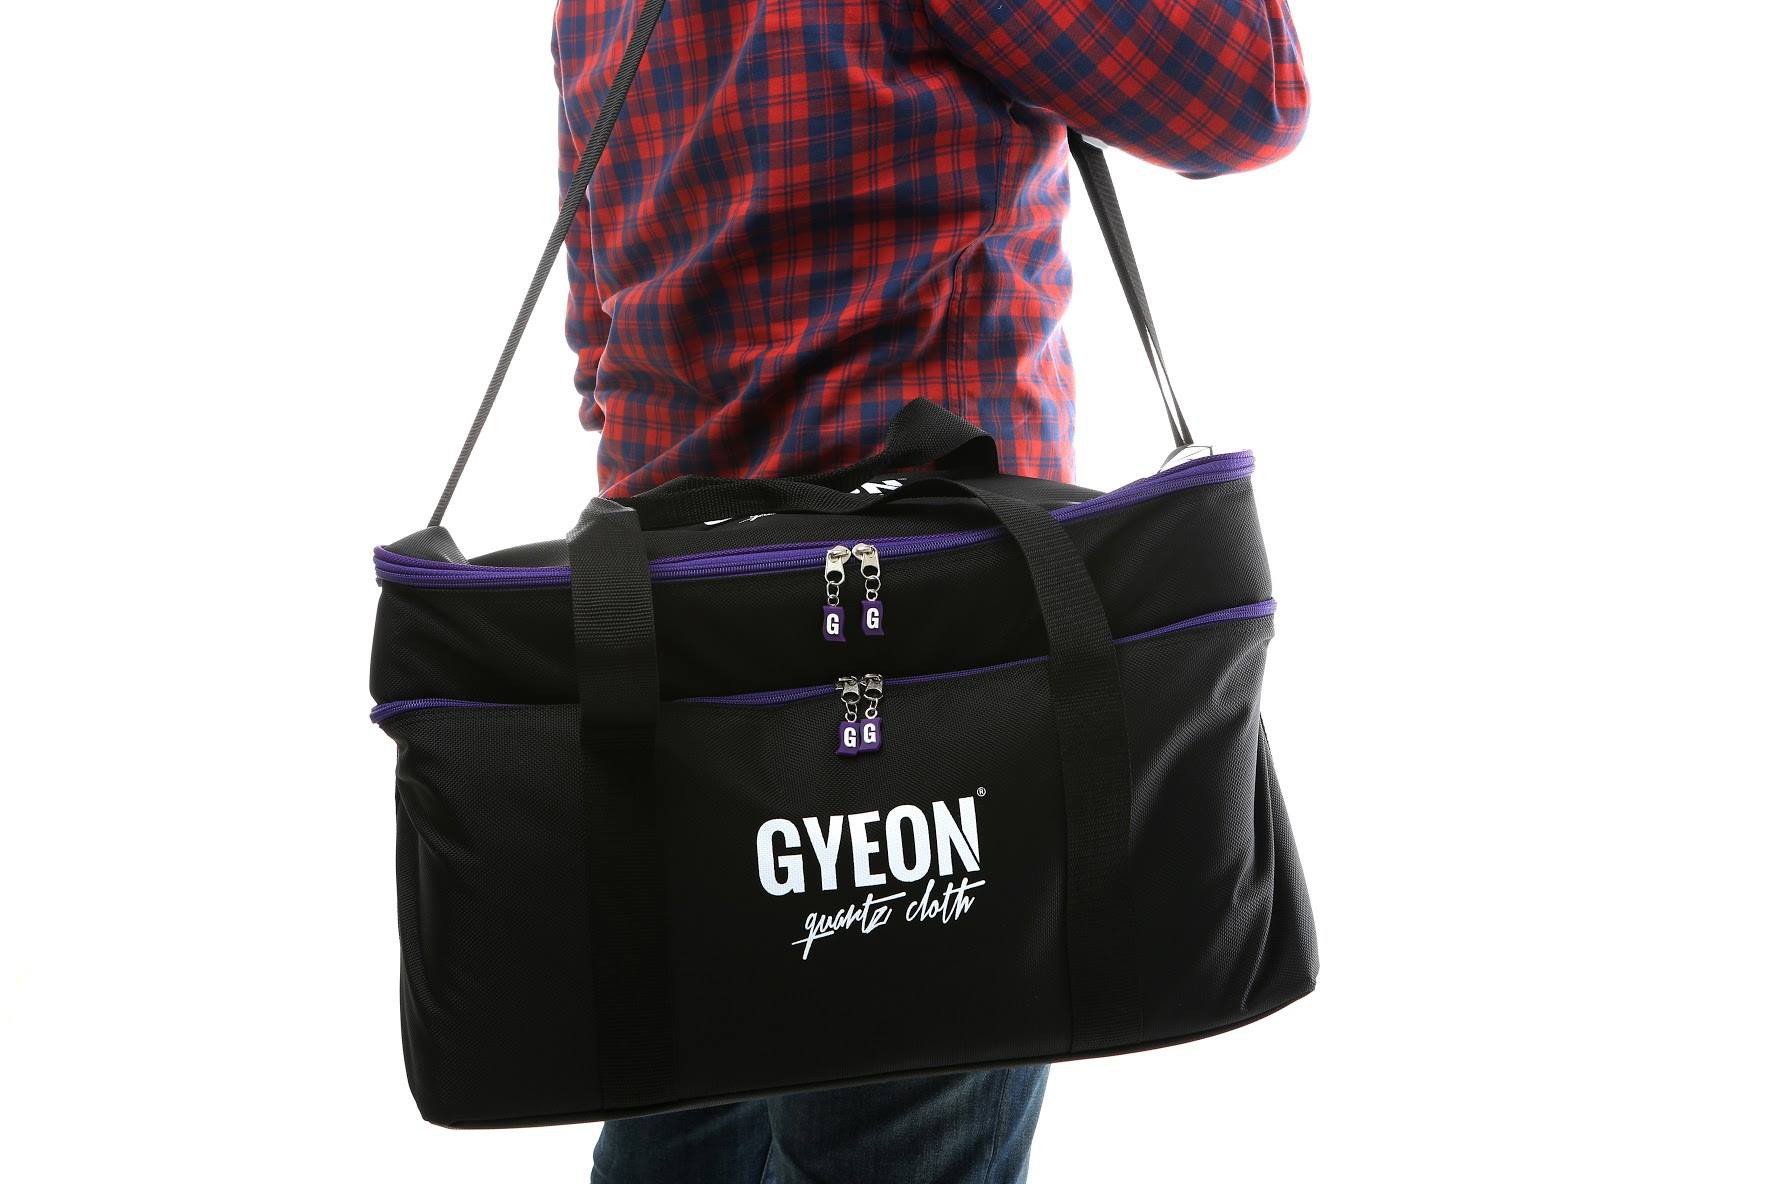 Сумка detail. Gyeon q2m detail Bag small. Сумка детейлера 3d DBAG L-43. Gyeon сумка для выездного детейлинга. Gyeon detail Bag small - сумка детейлера (маленькая).